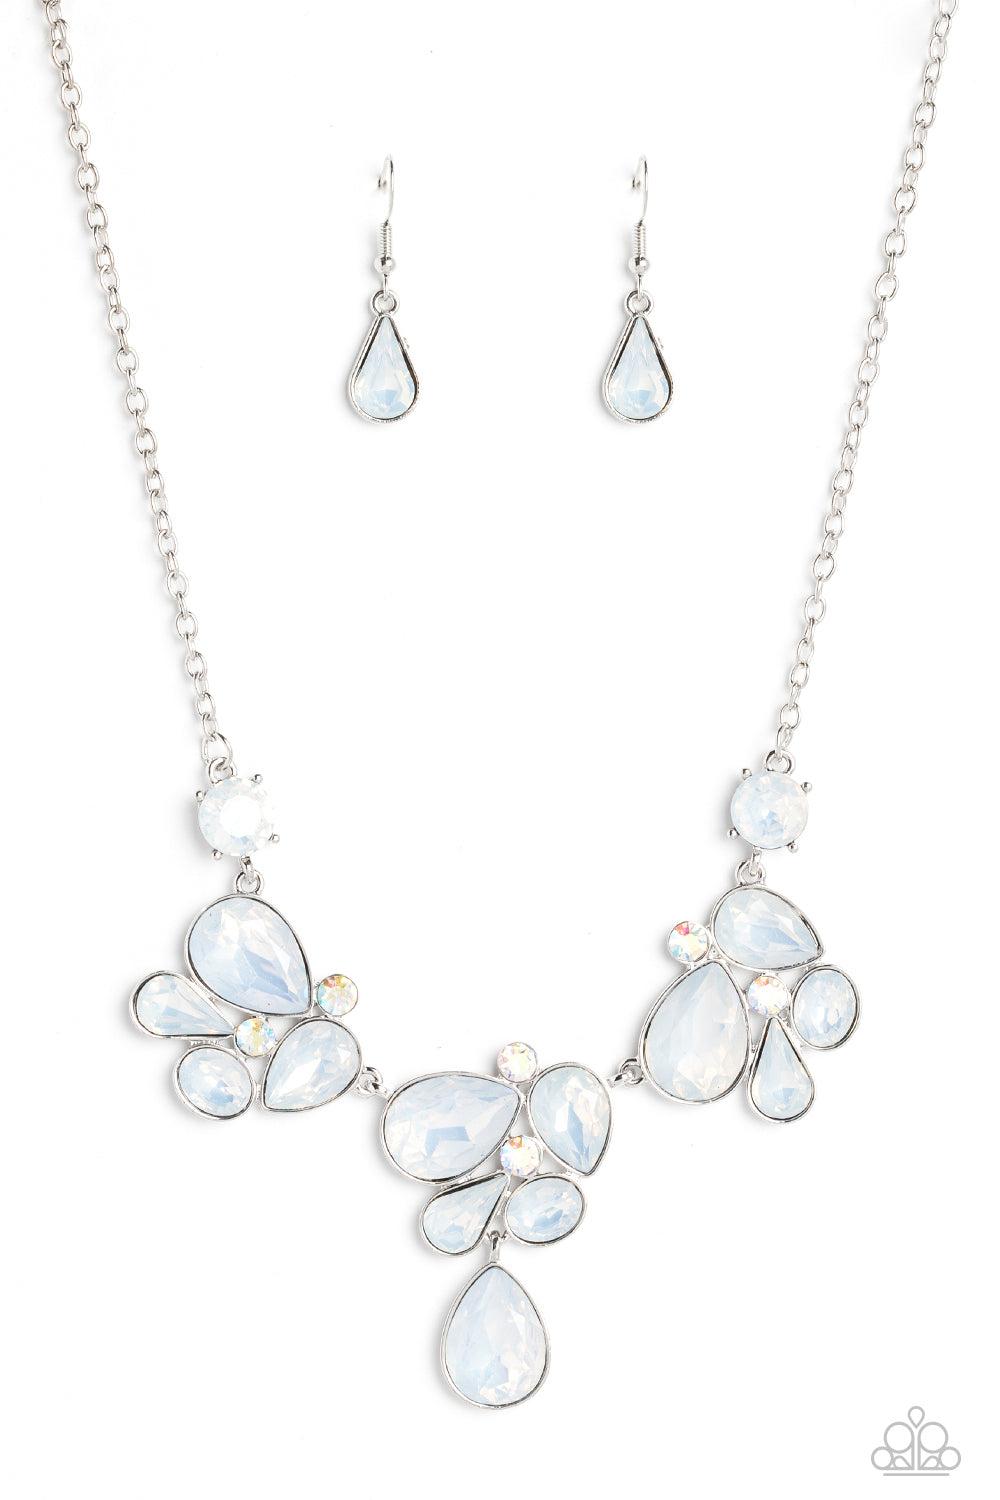 Everglade Escape White Opalescent Gem Necklace - Paparazzi Accessories- lightbox - CarasShop.com - $5 Jewelry by Cara Jewels